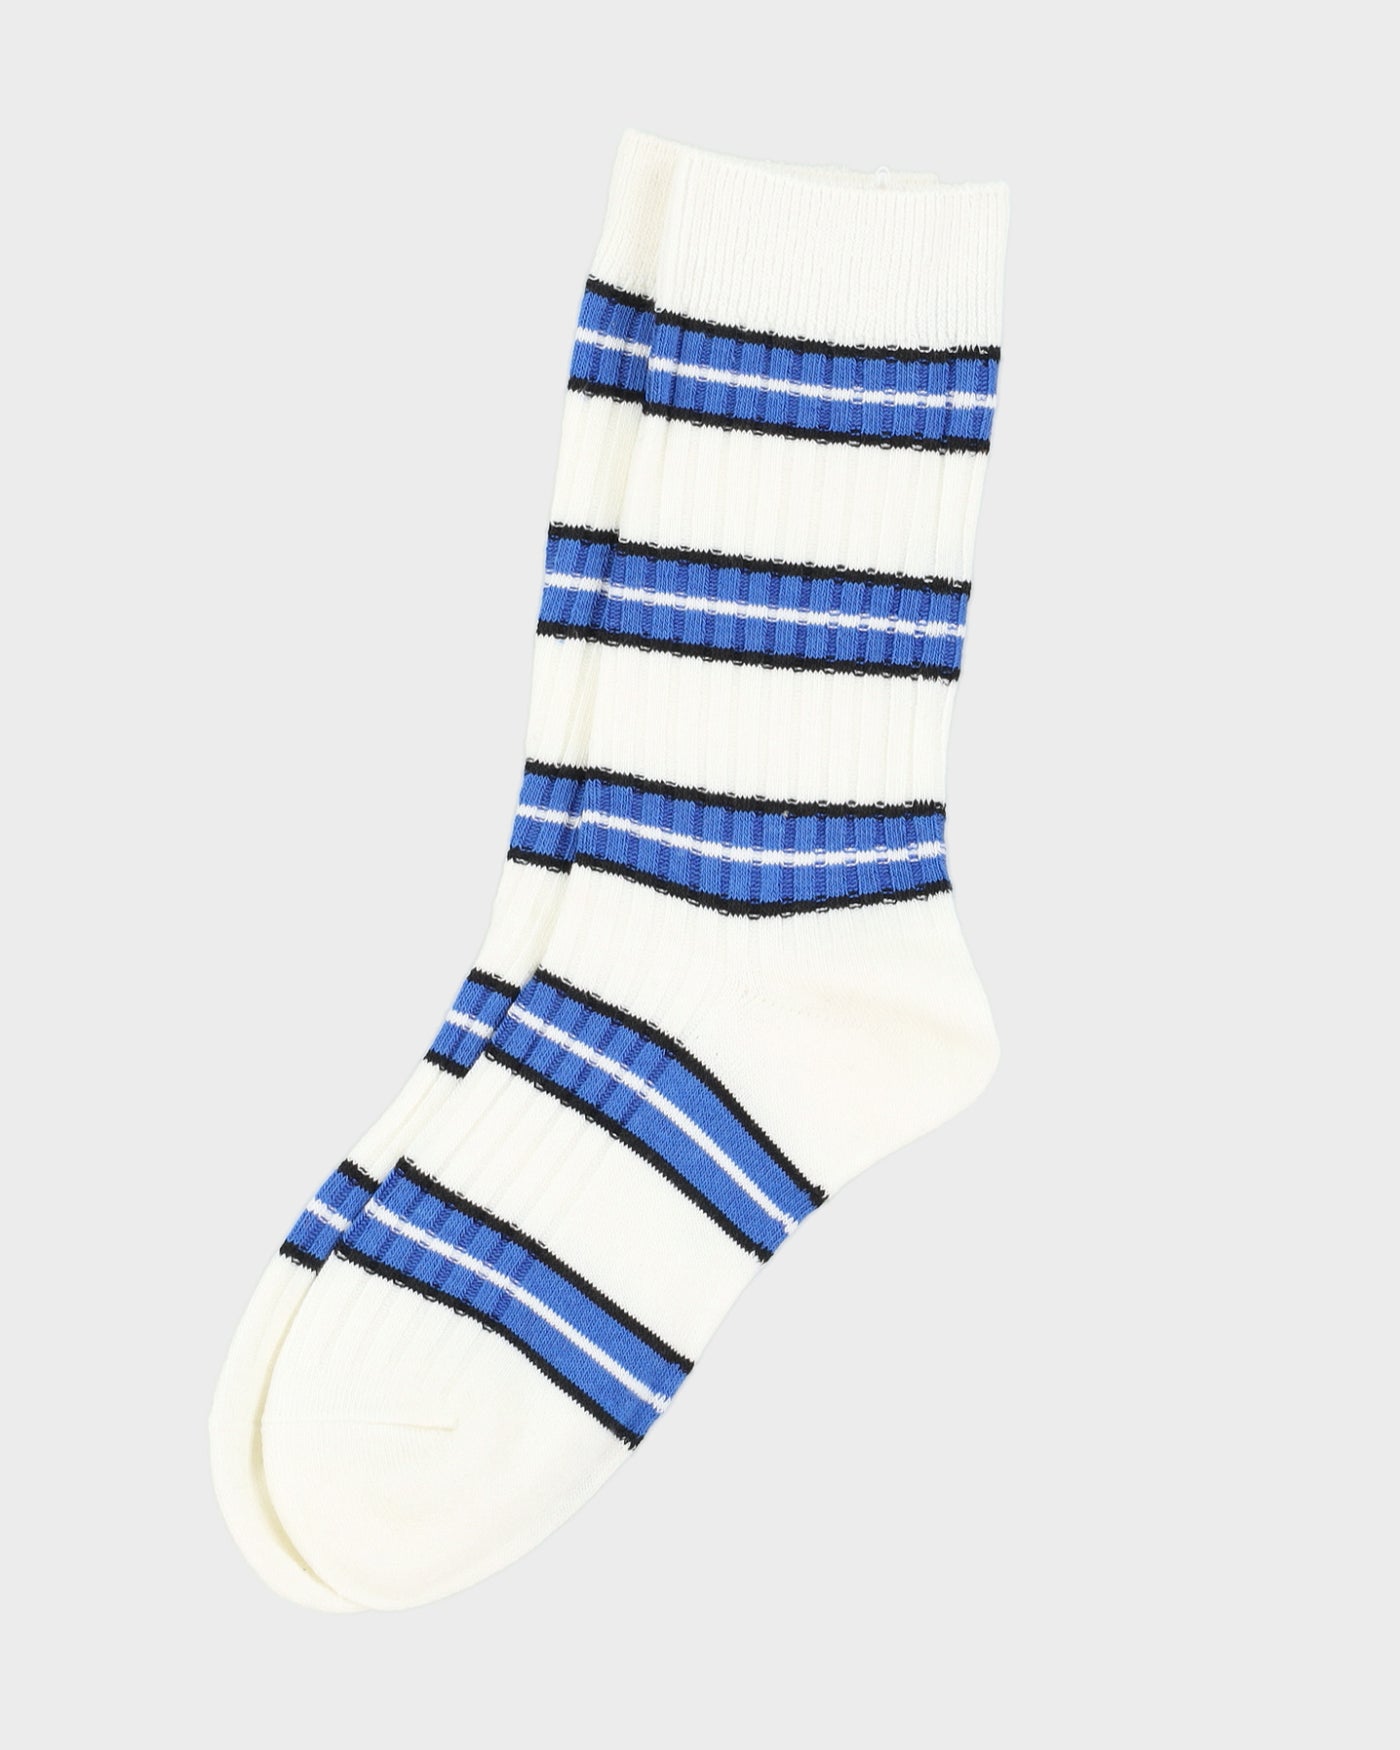 Blue & Black Striped  Socks - One Size